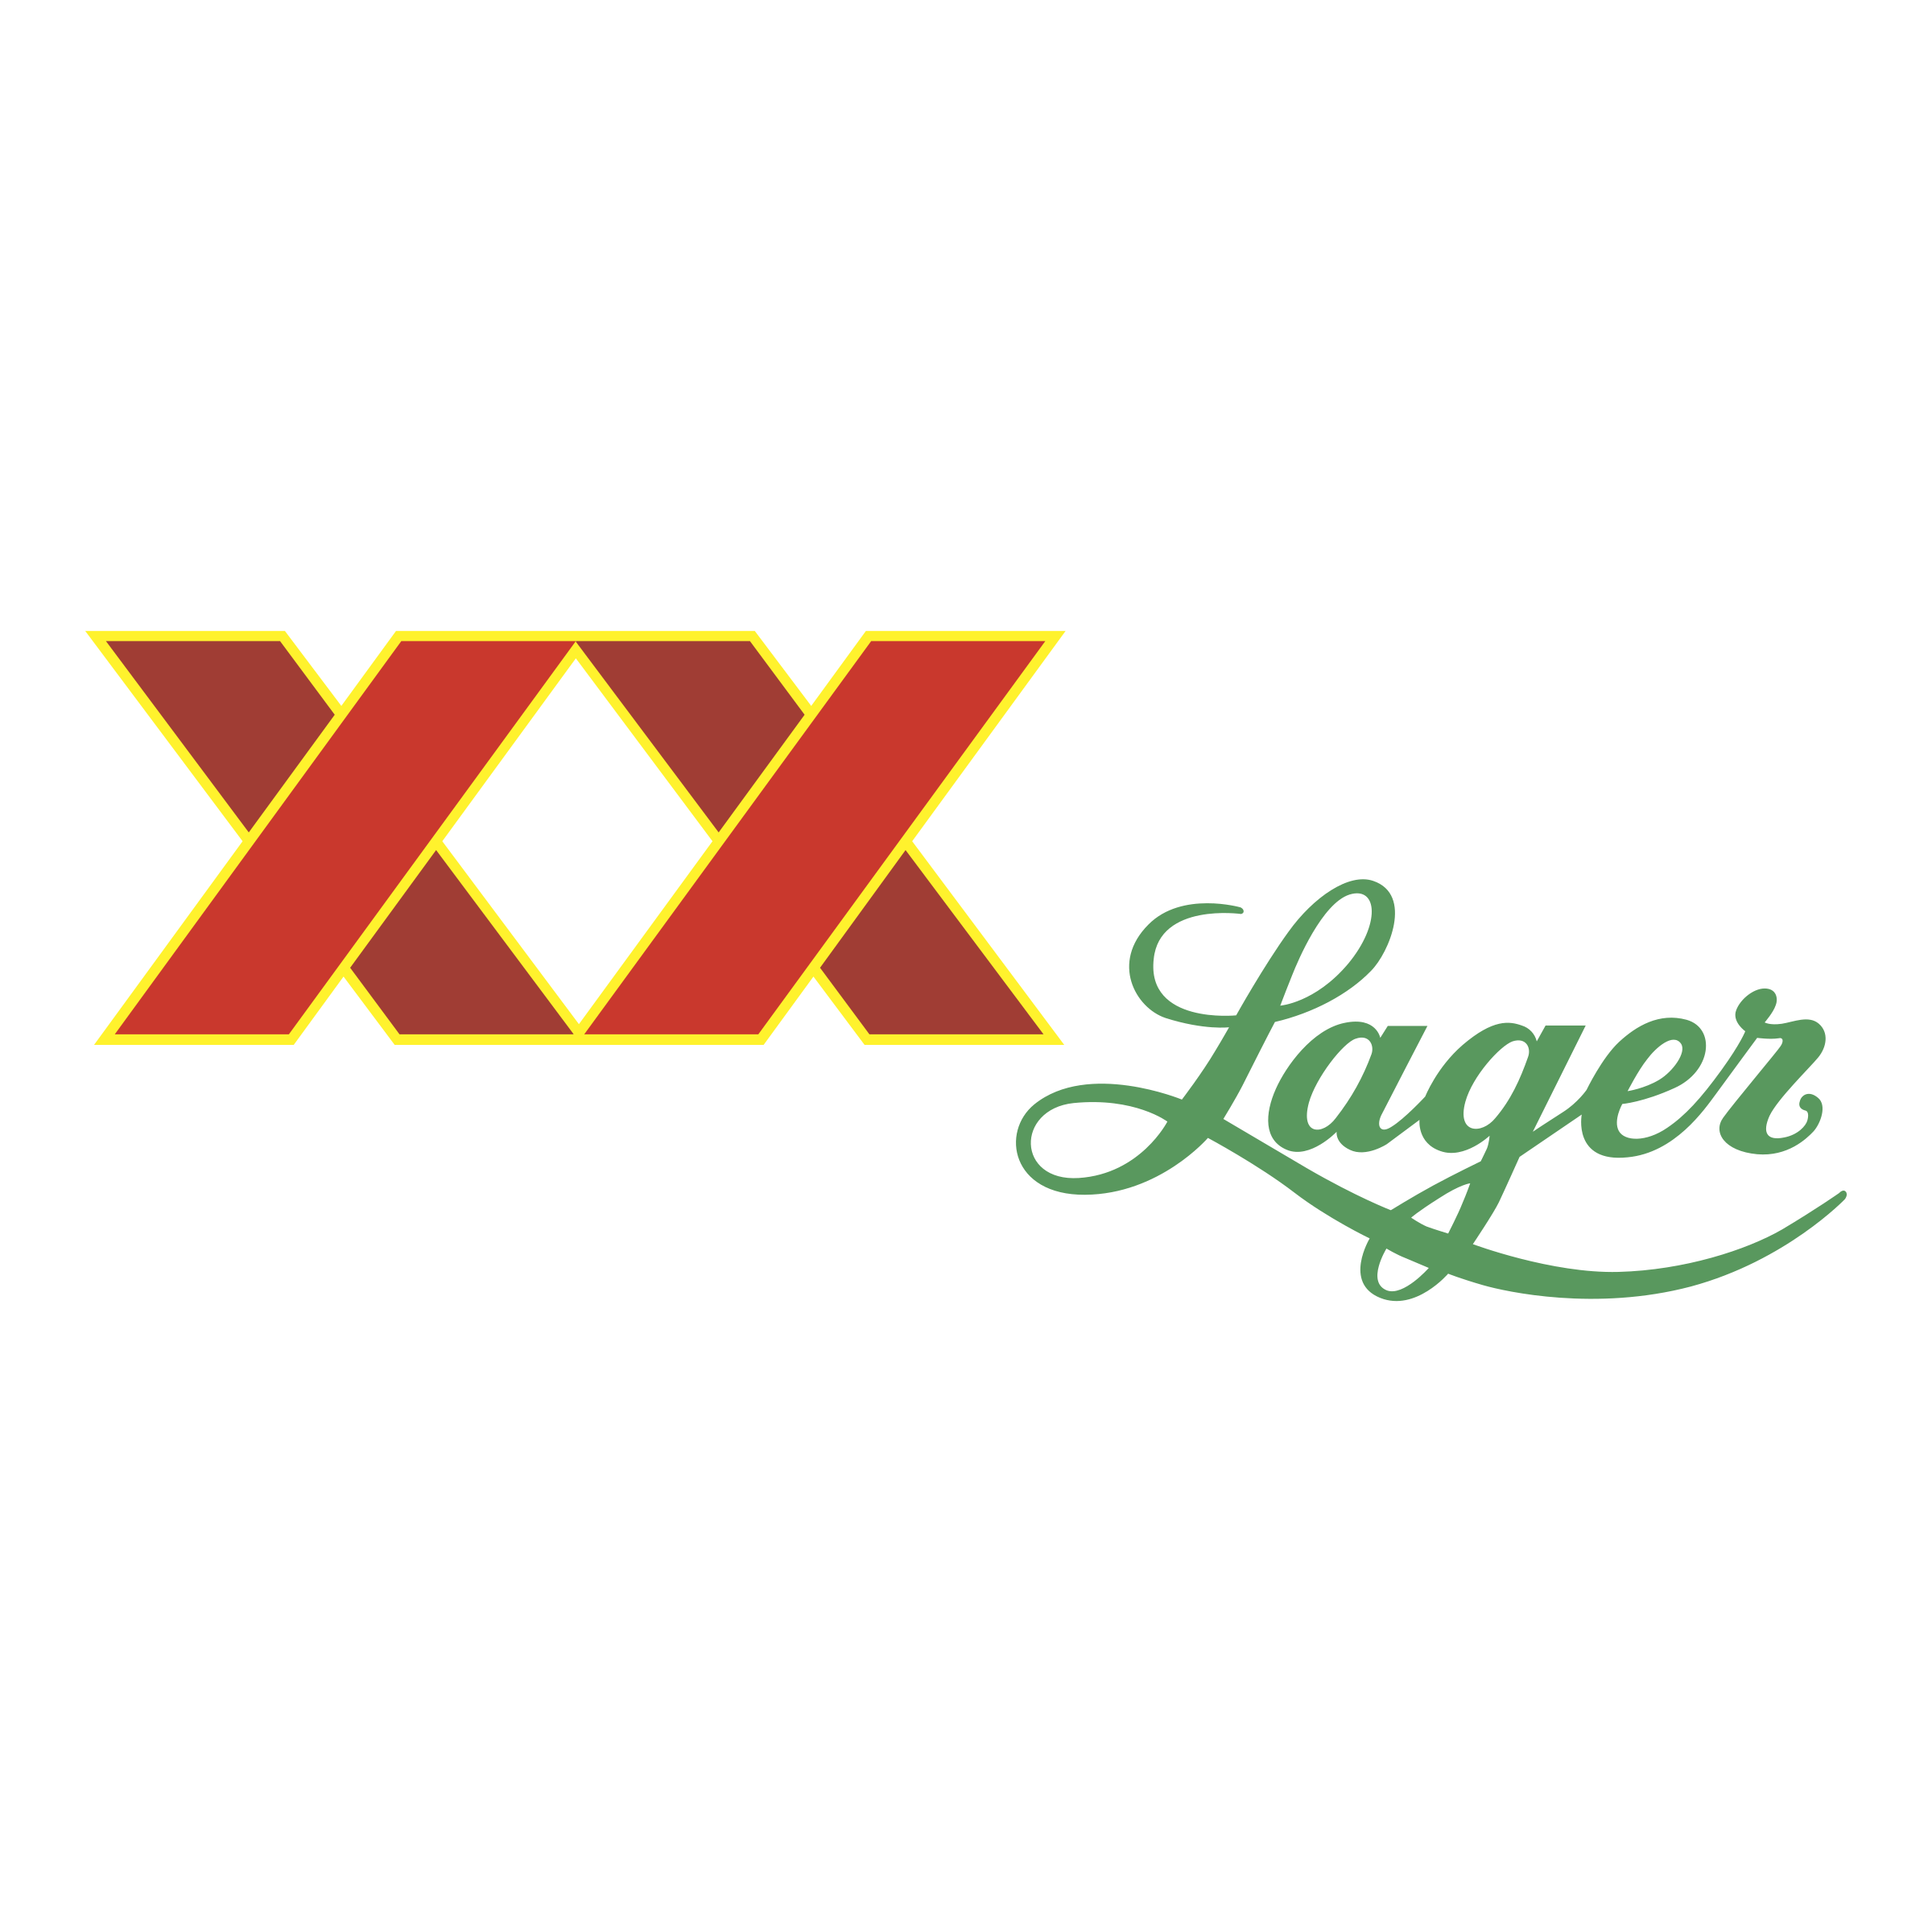 Xx Logo - XX Lager Logo PNG Transparent & SVG Vector - Freebie Supply